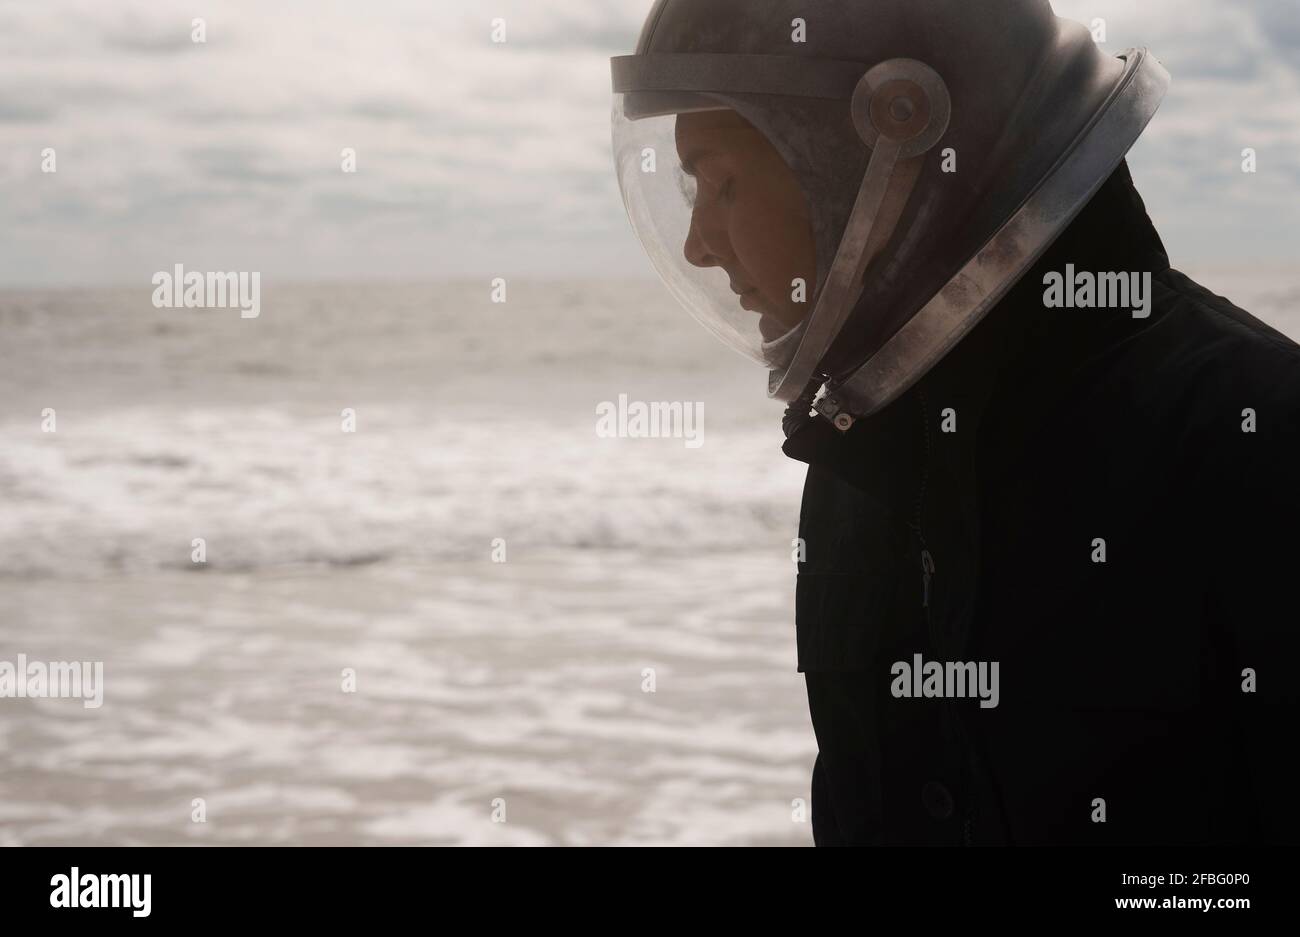 Astronautic man in space helmet at beach Stock Photo